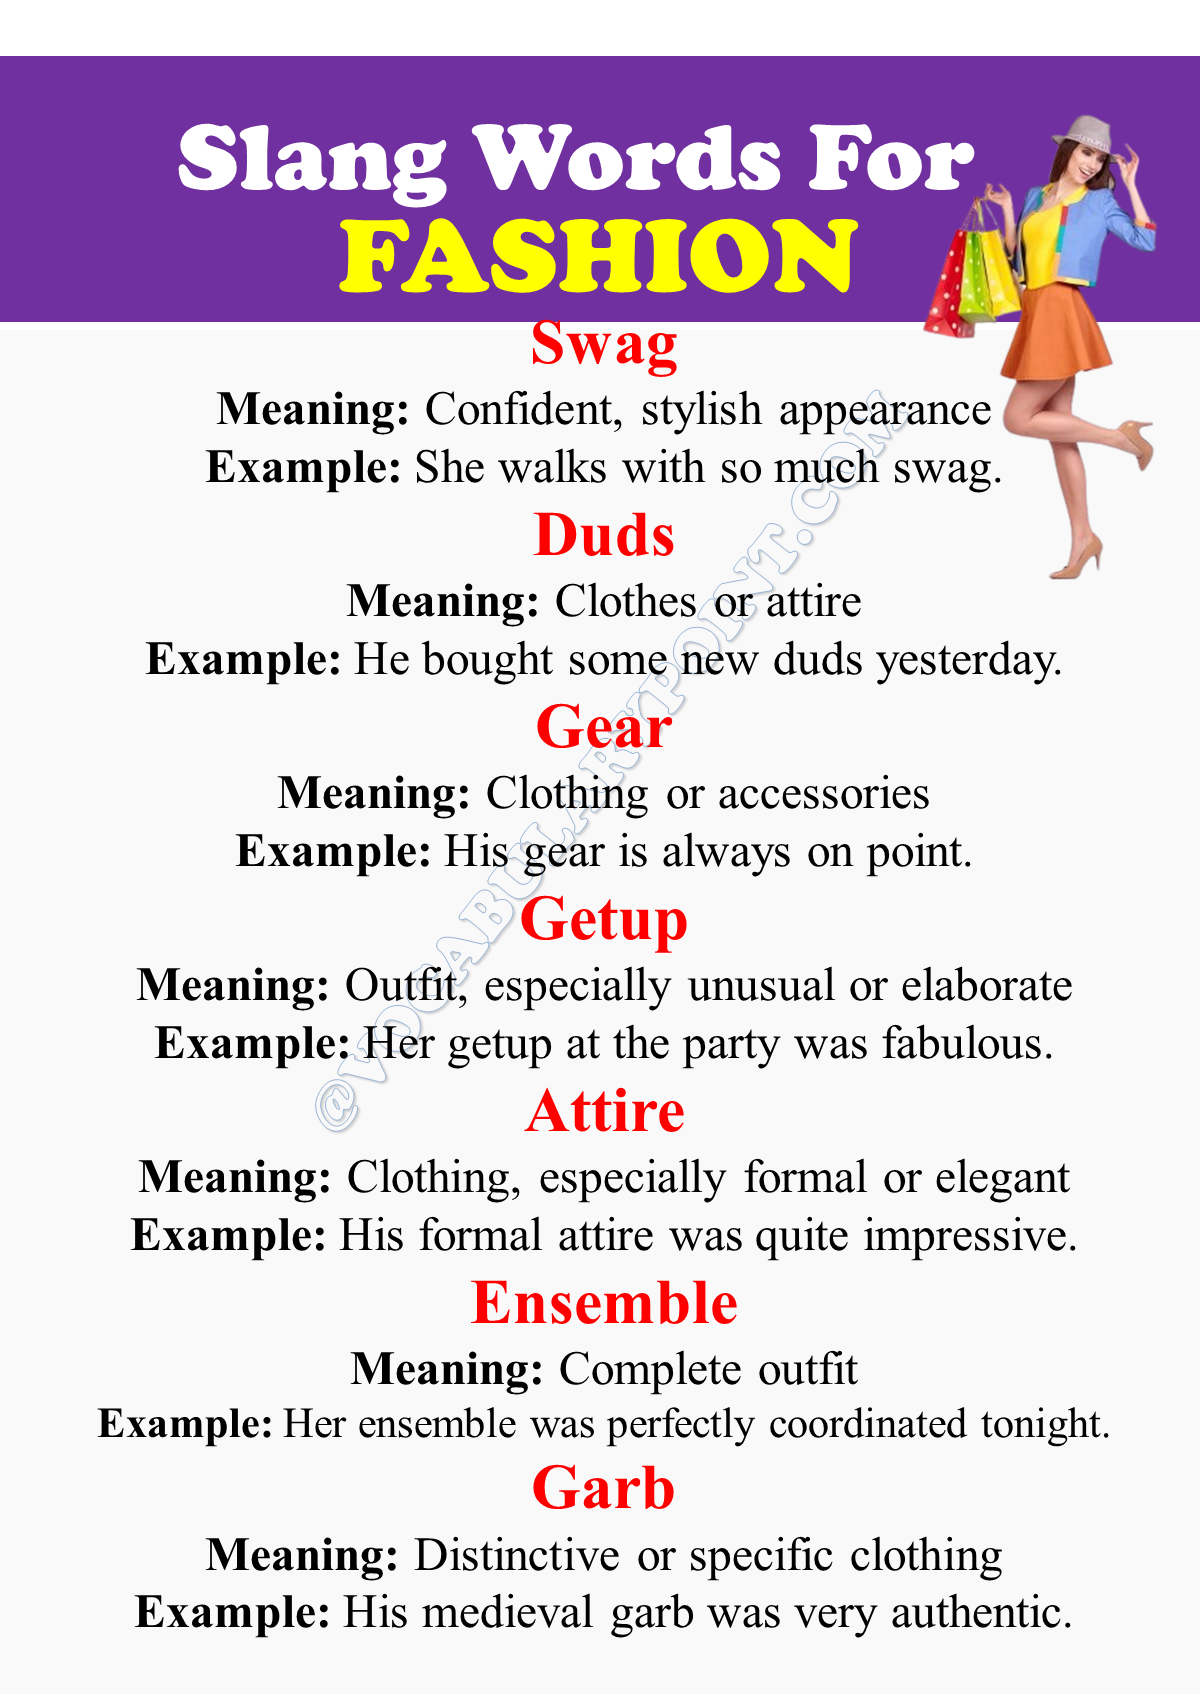 Slang Words For Fashion